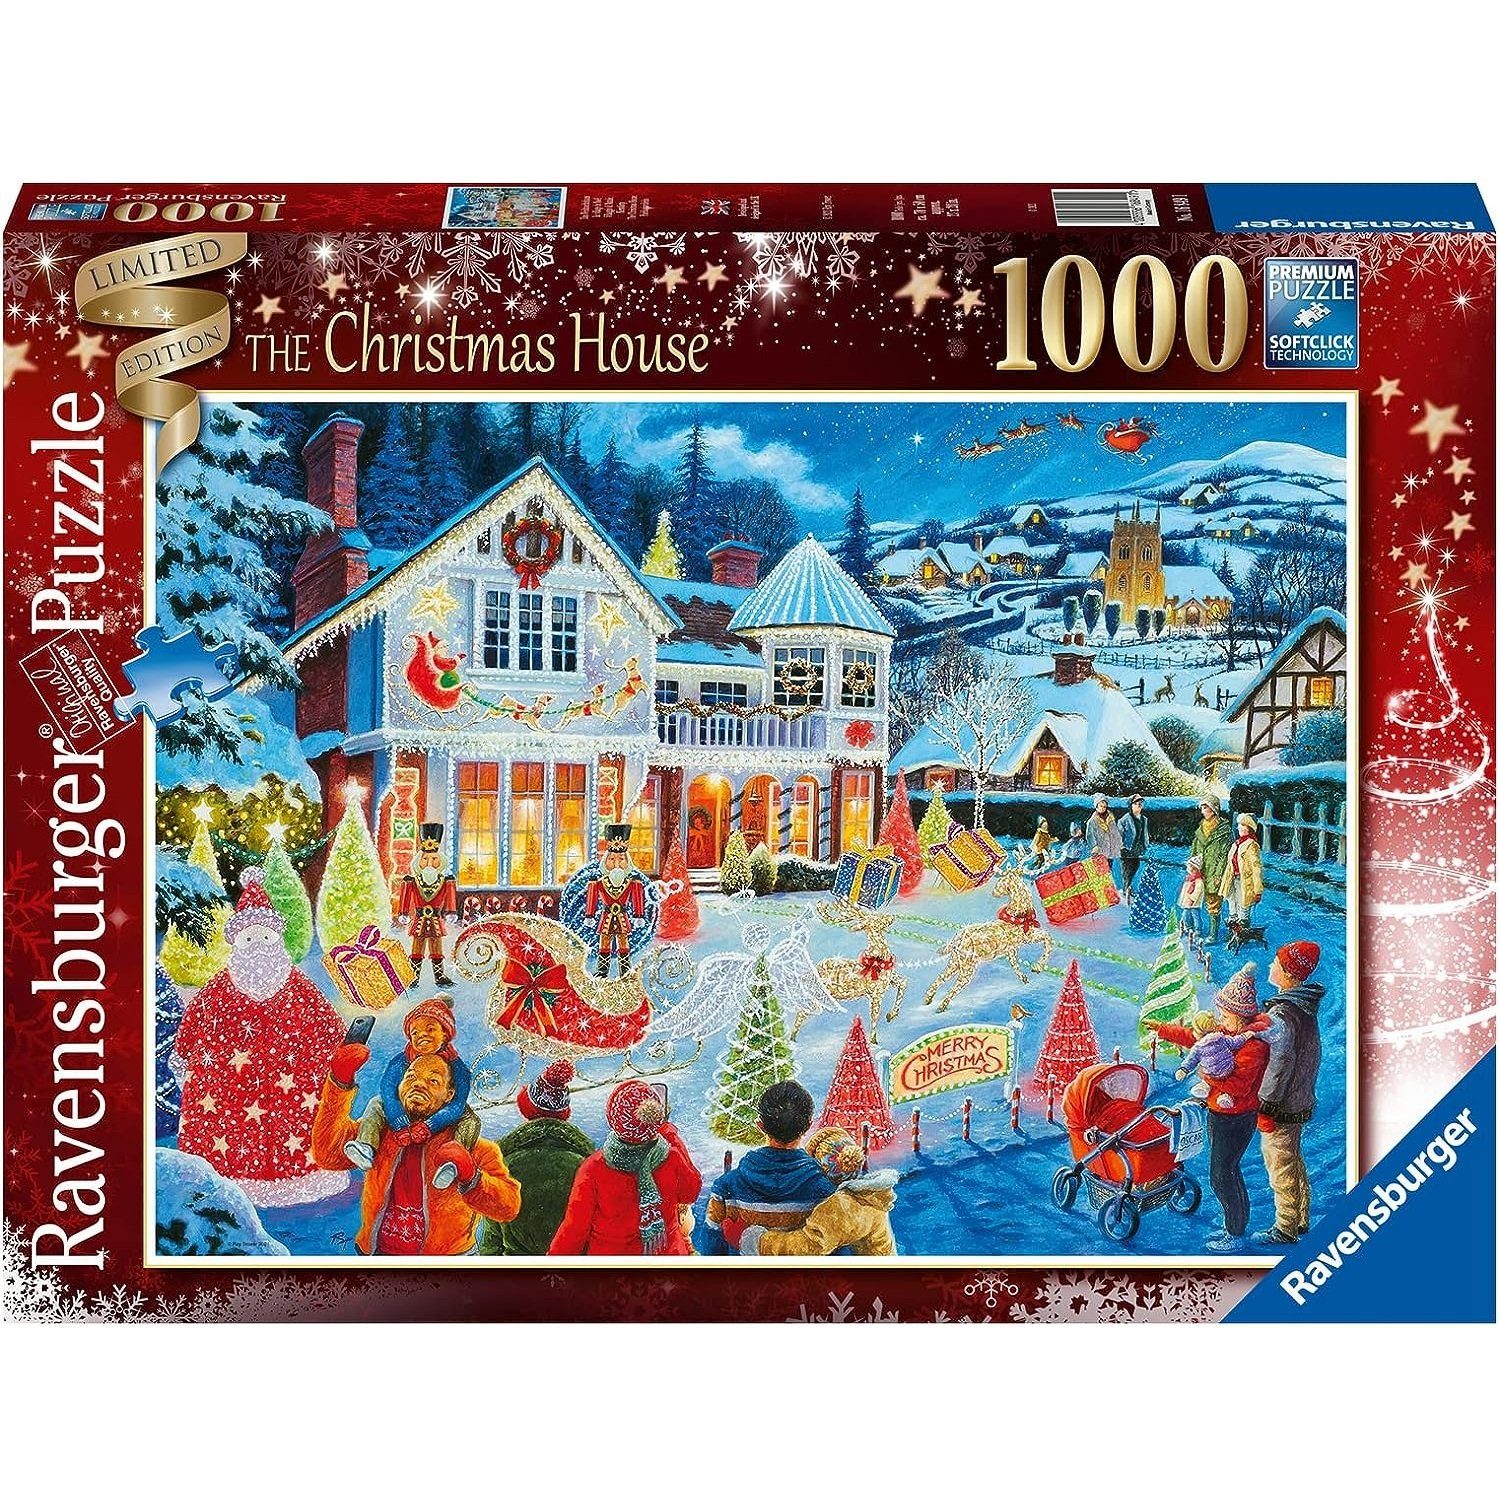 Ravensburger Puzzle Ravensburger - Das Weihnachtshaus, 1000 Teile Puzzle, 1000 Puzzleteile